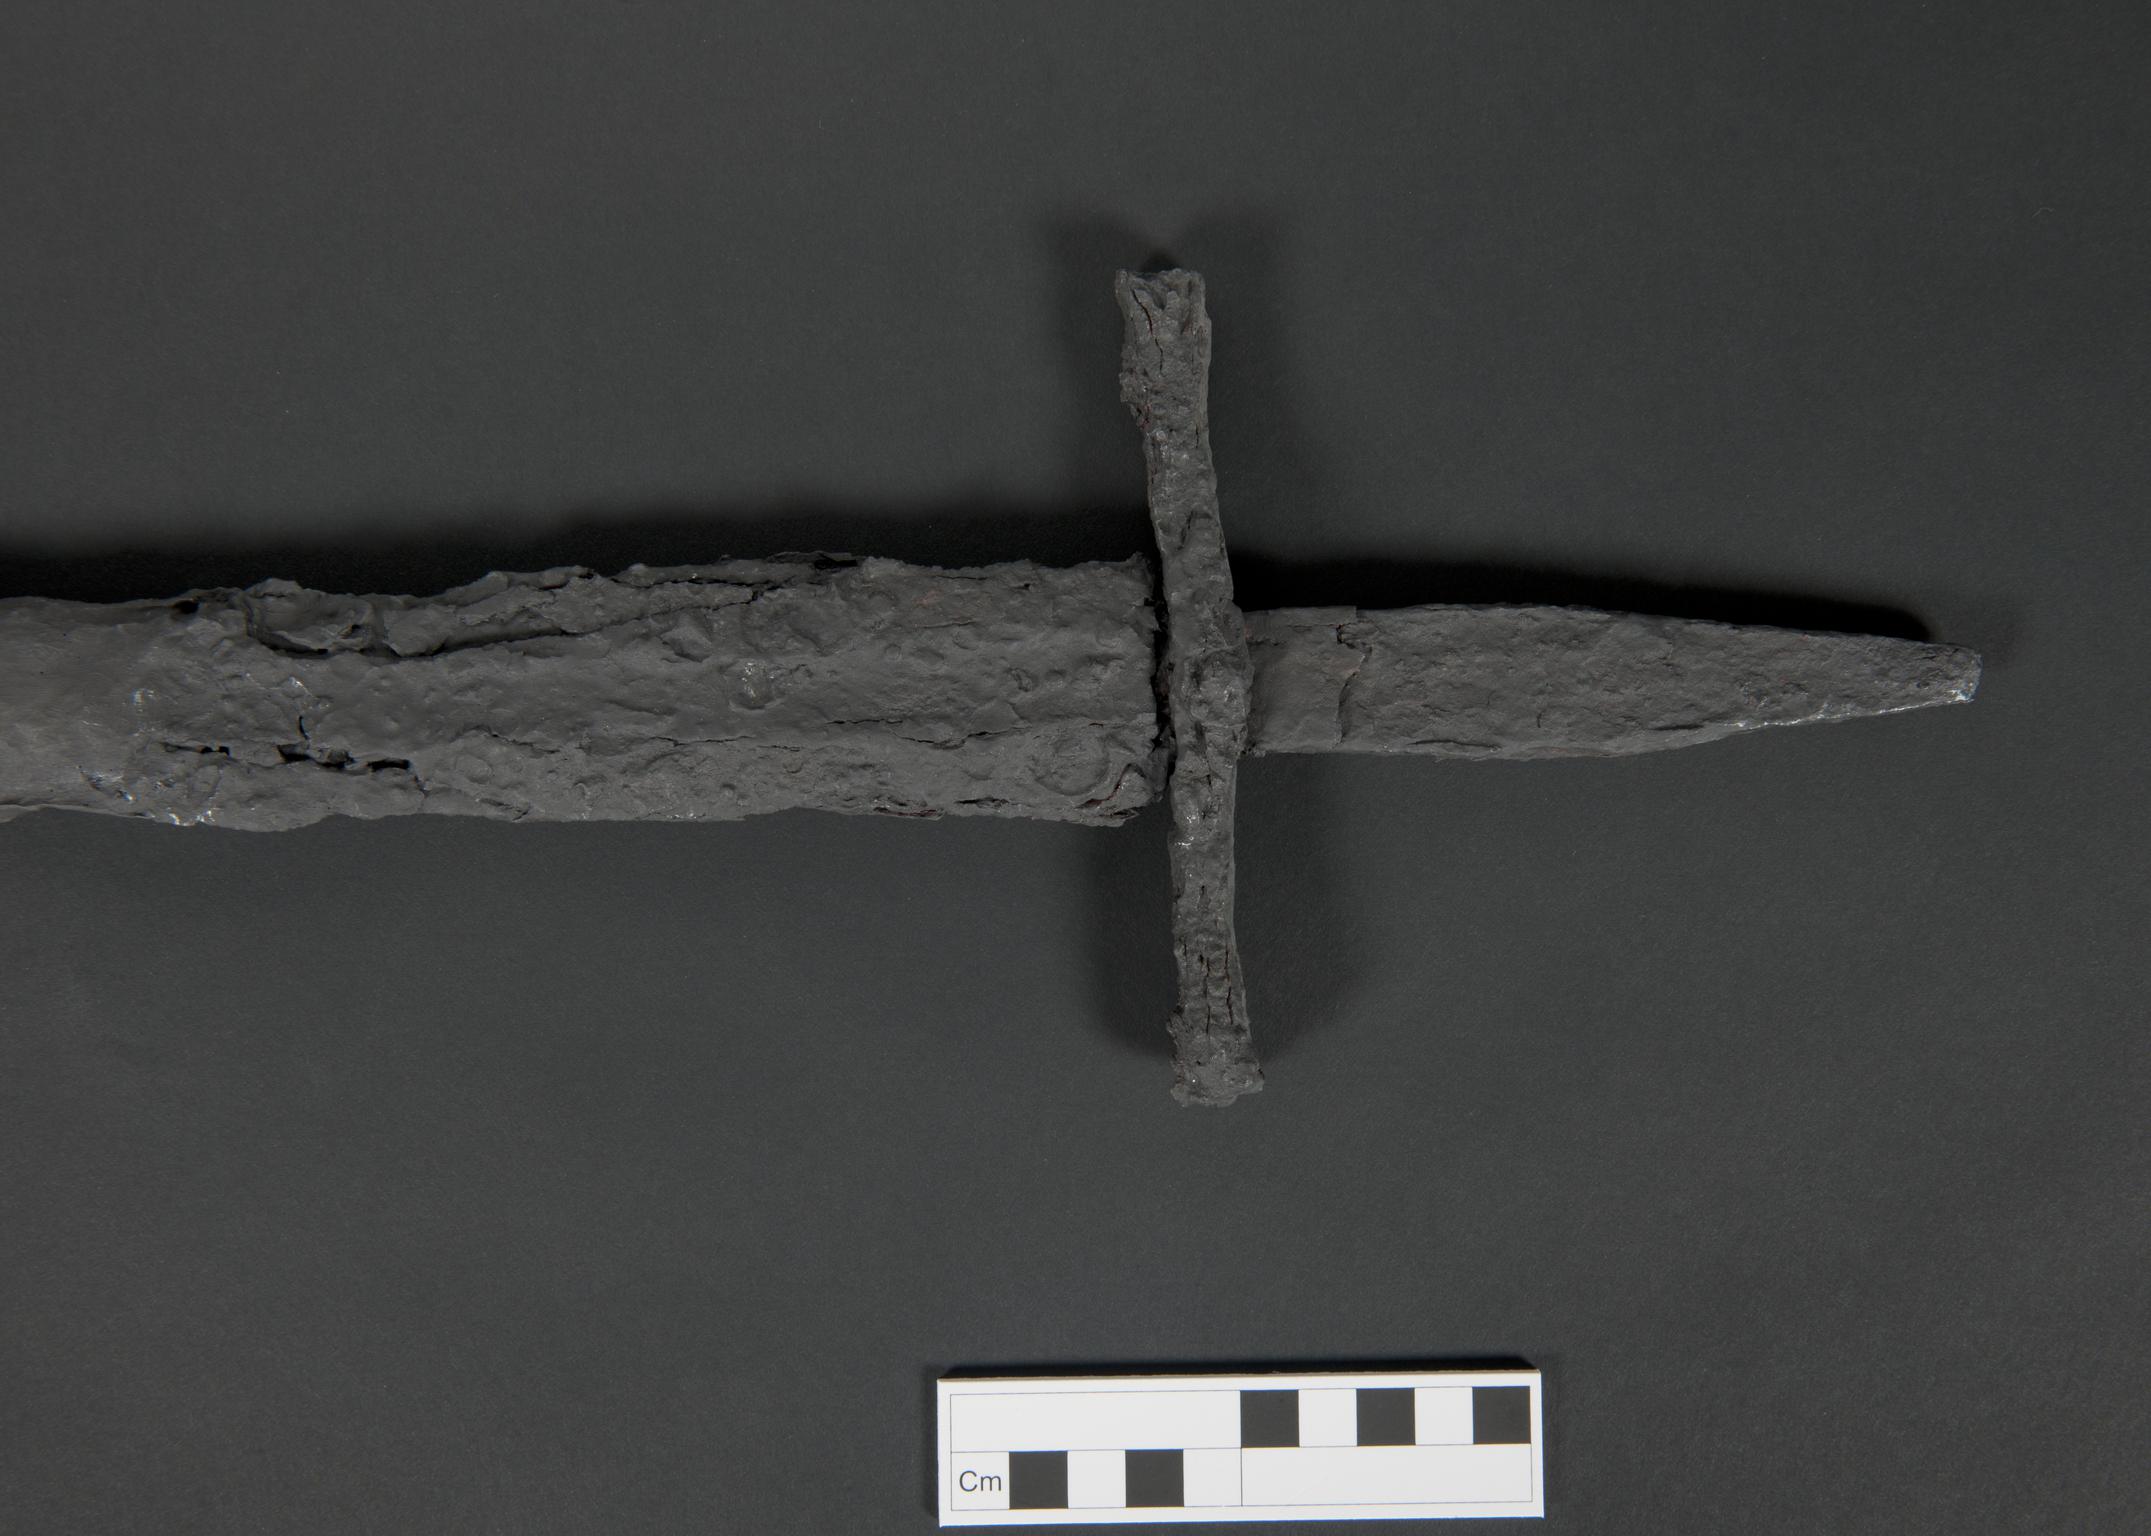 Medieval iron sword